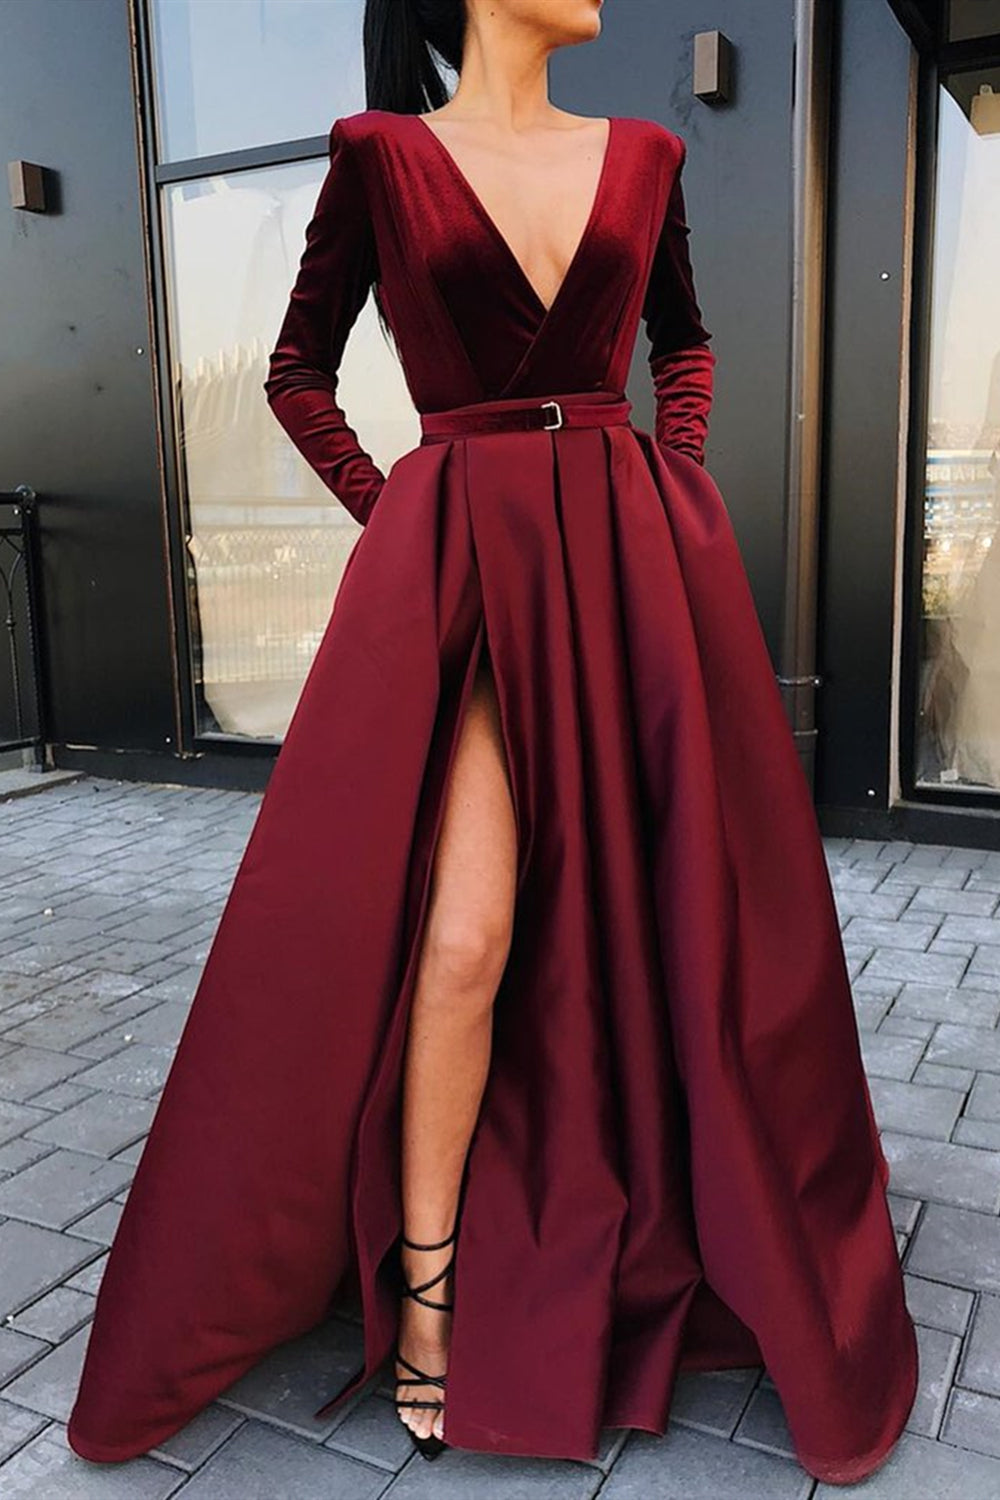 Elegant Maroon Sleeveless Dress for Brides